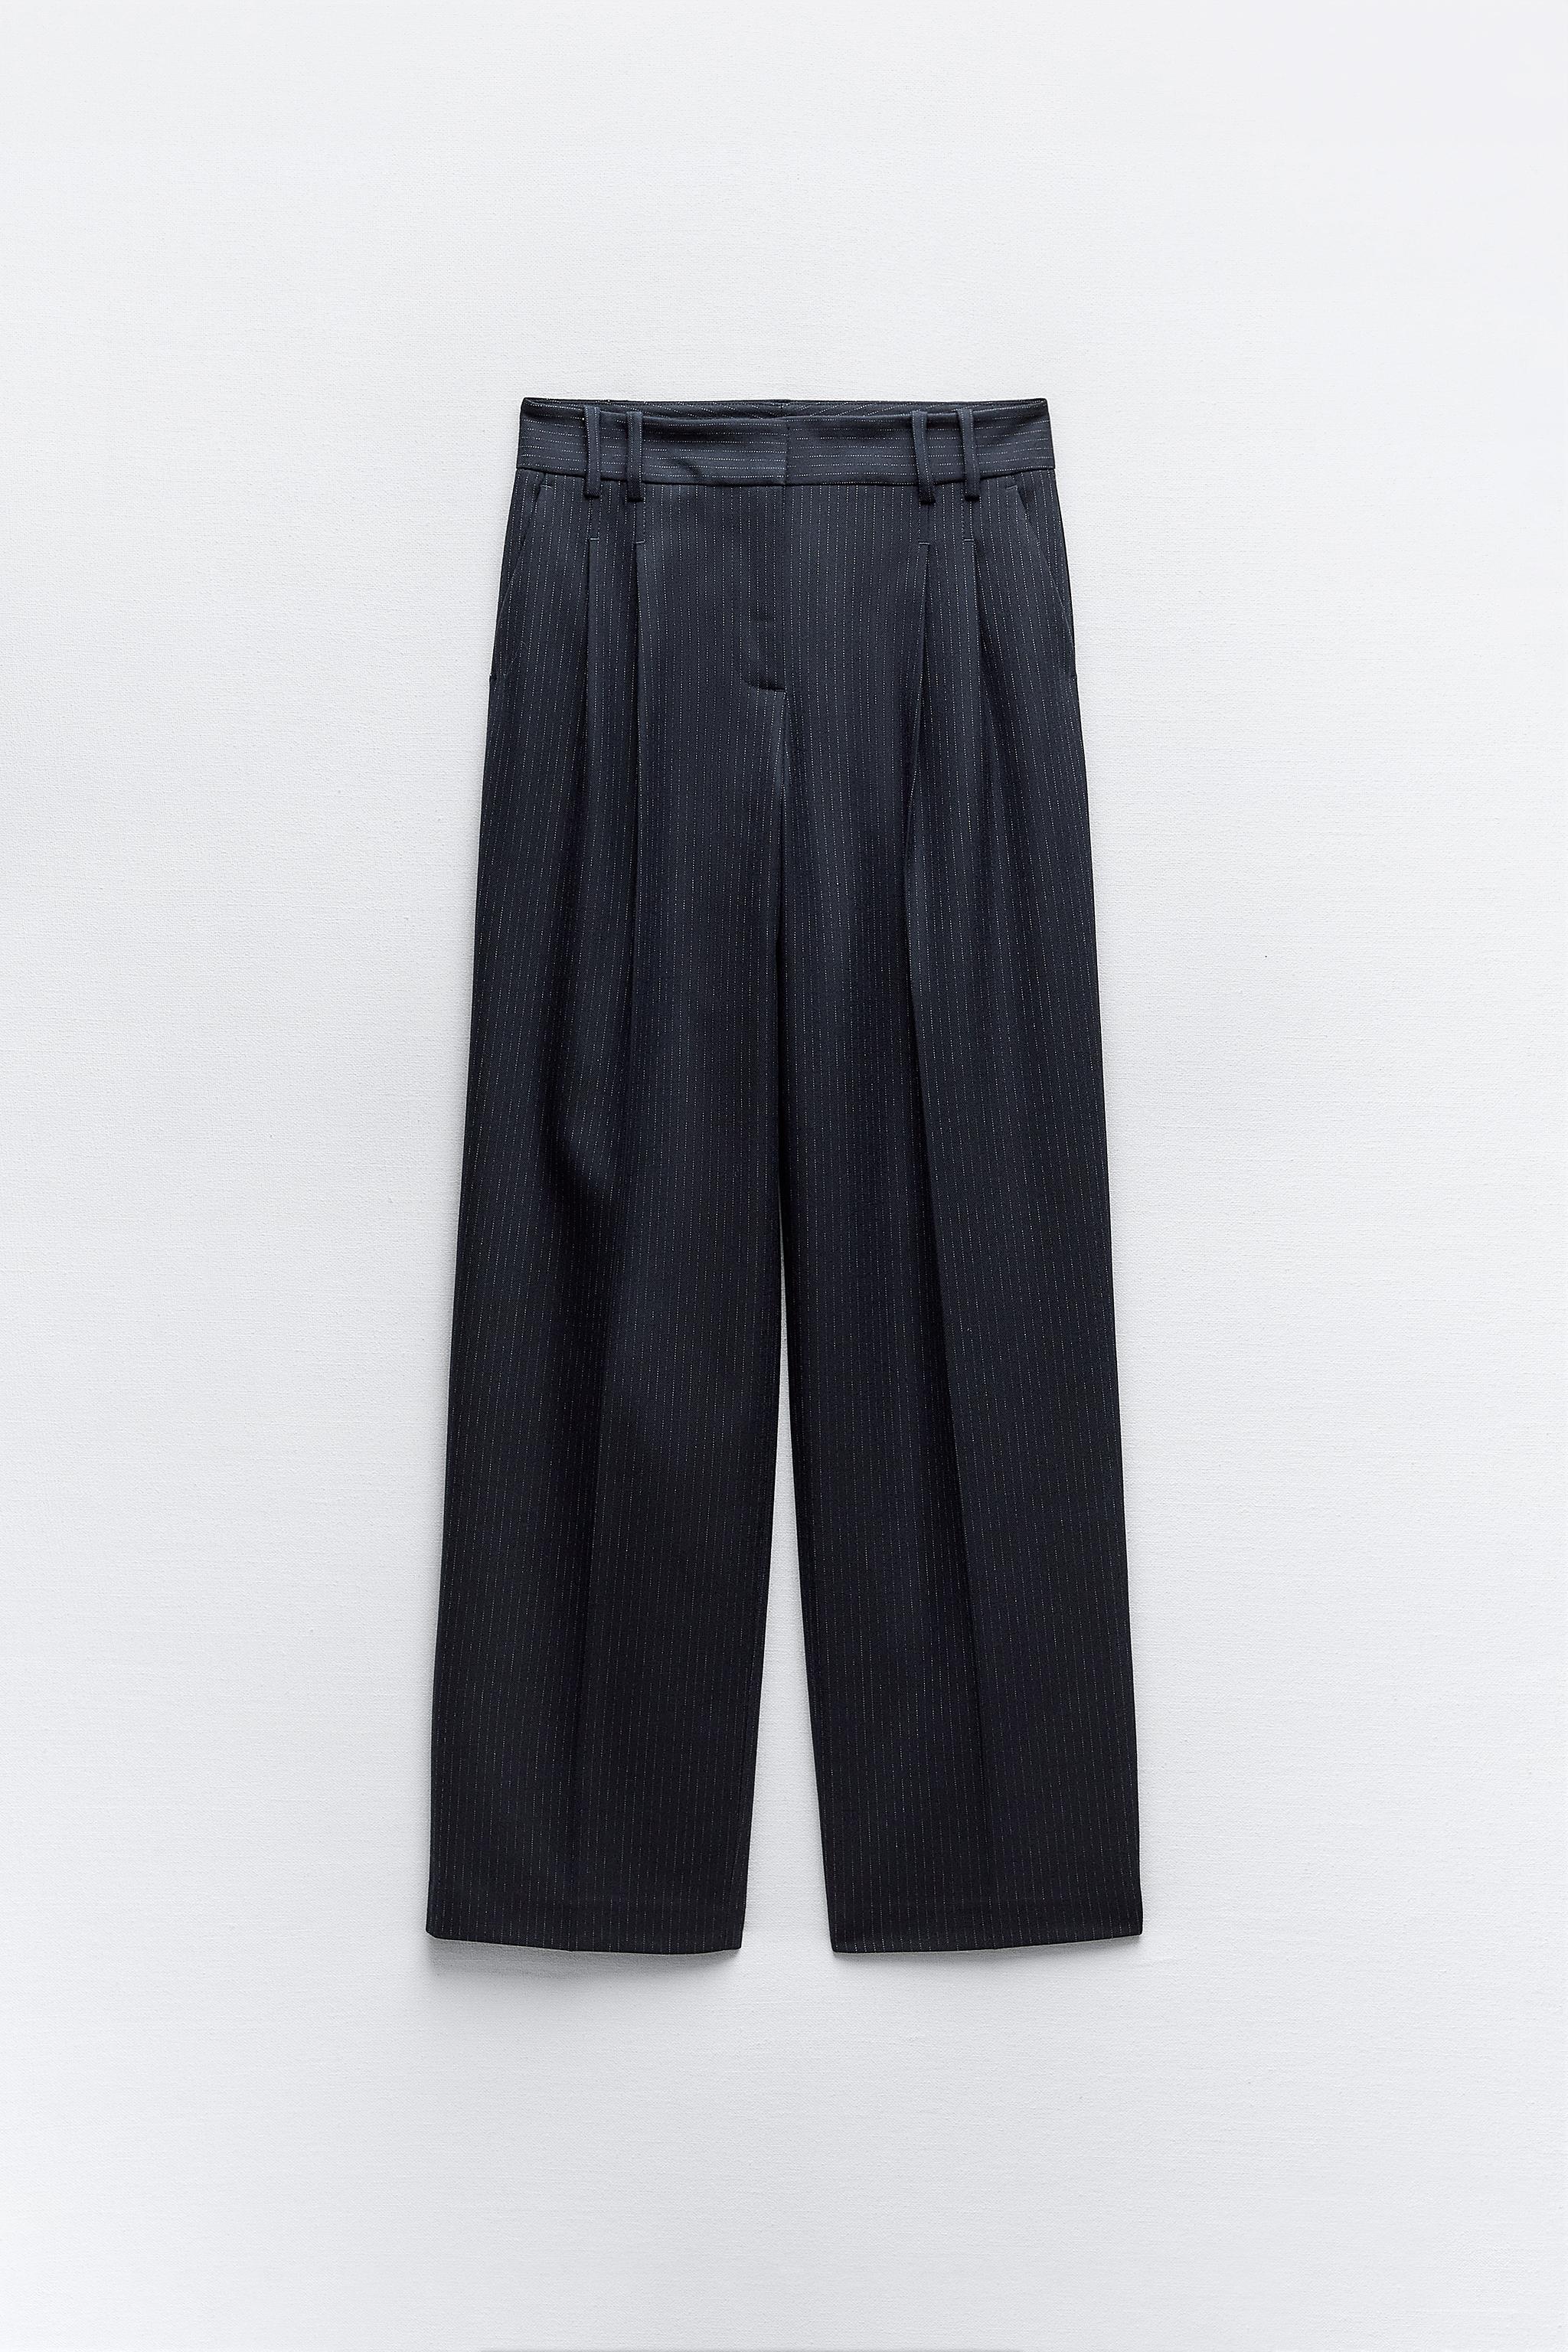 Zara Trafaluc Collection Black Pin Stripe Tapered Skinny Leg Knit Pants  Small